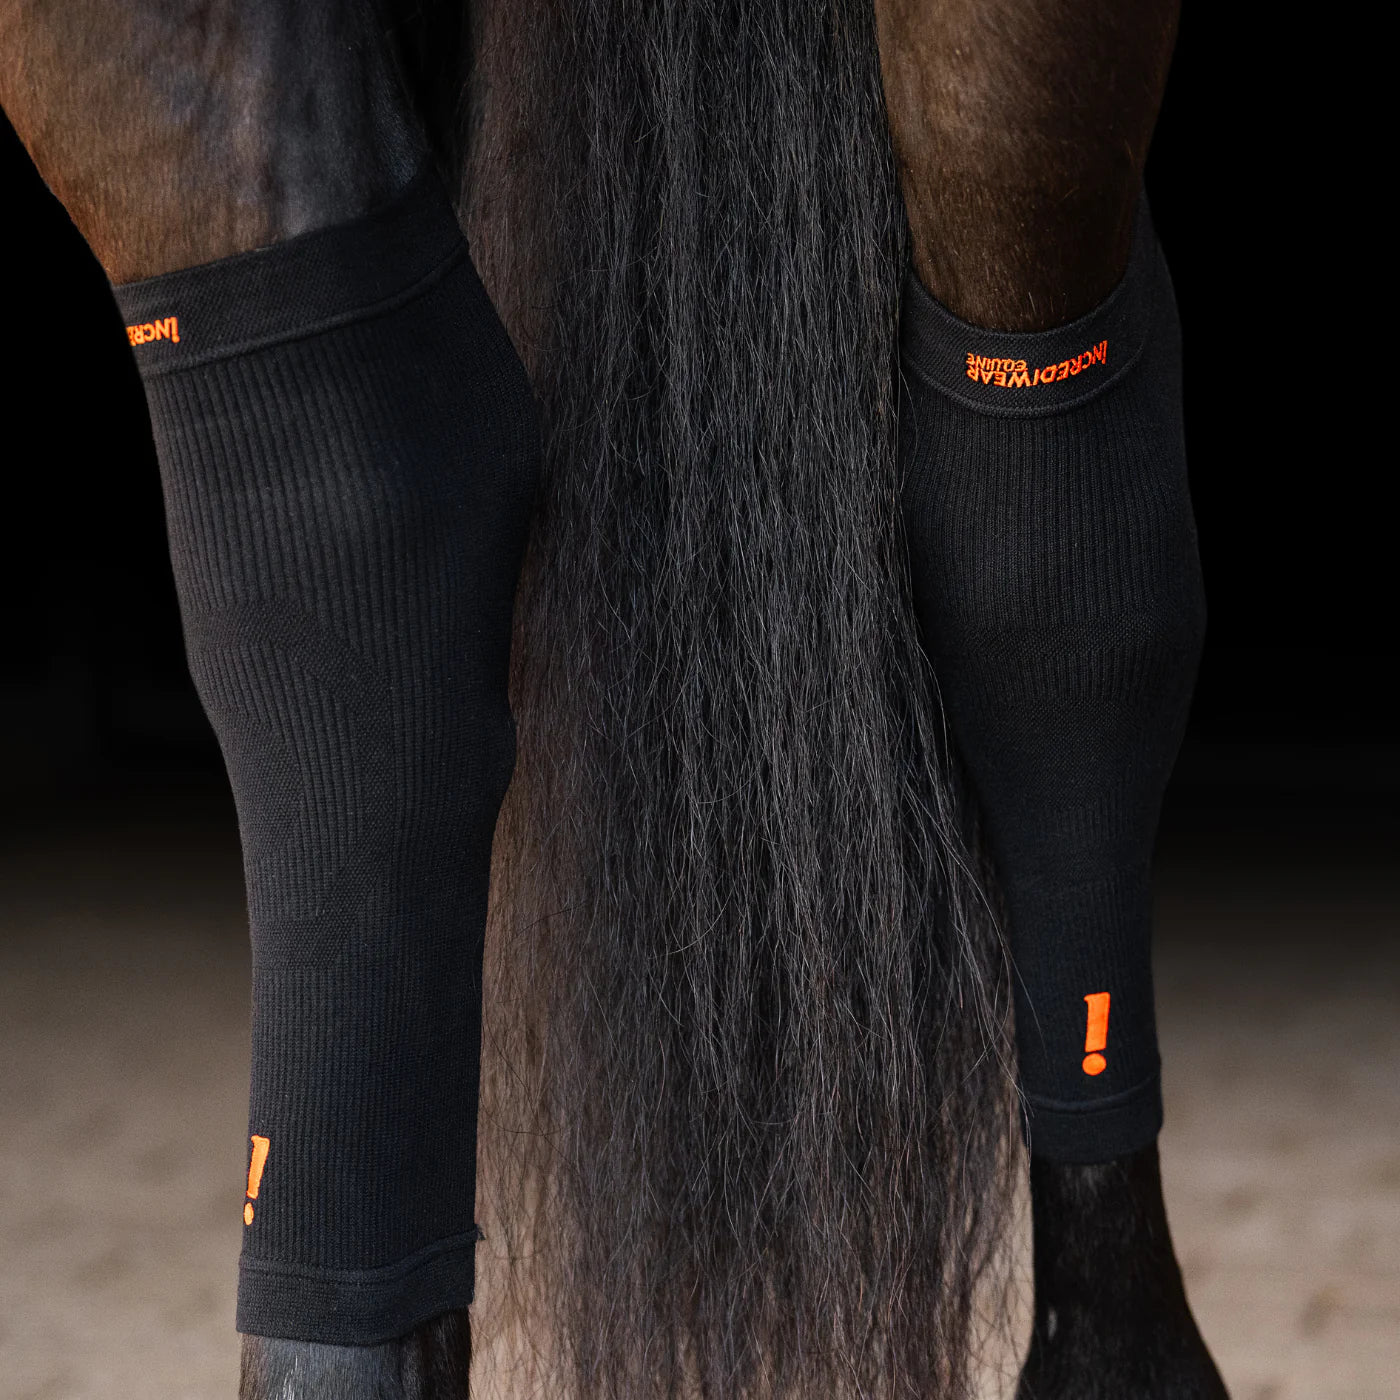 Incrediwear Equine Hoof Sock Set Black